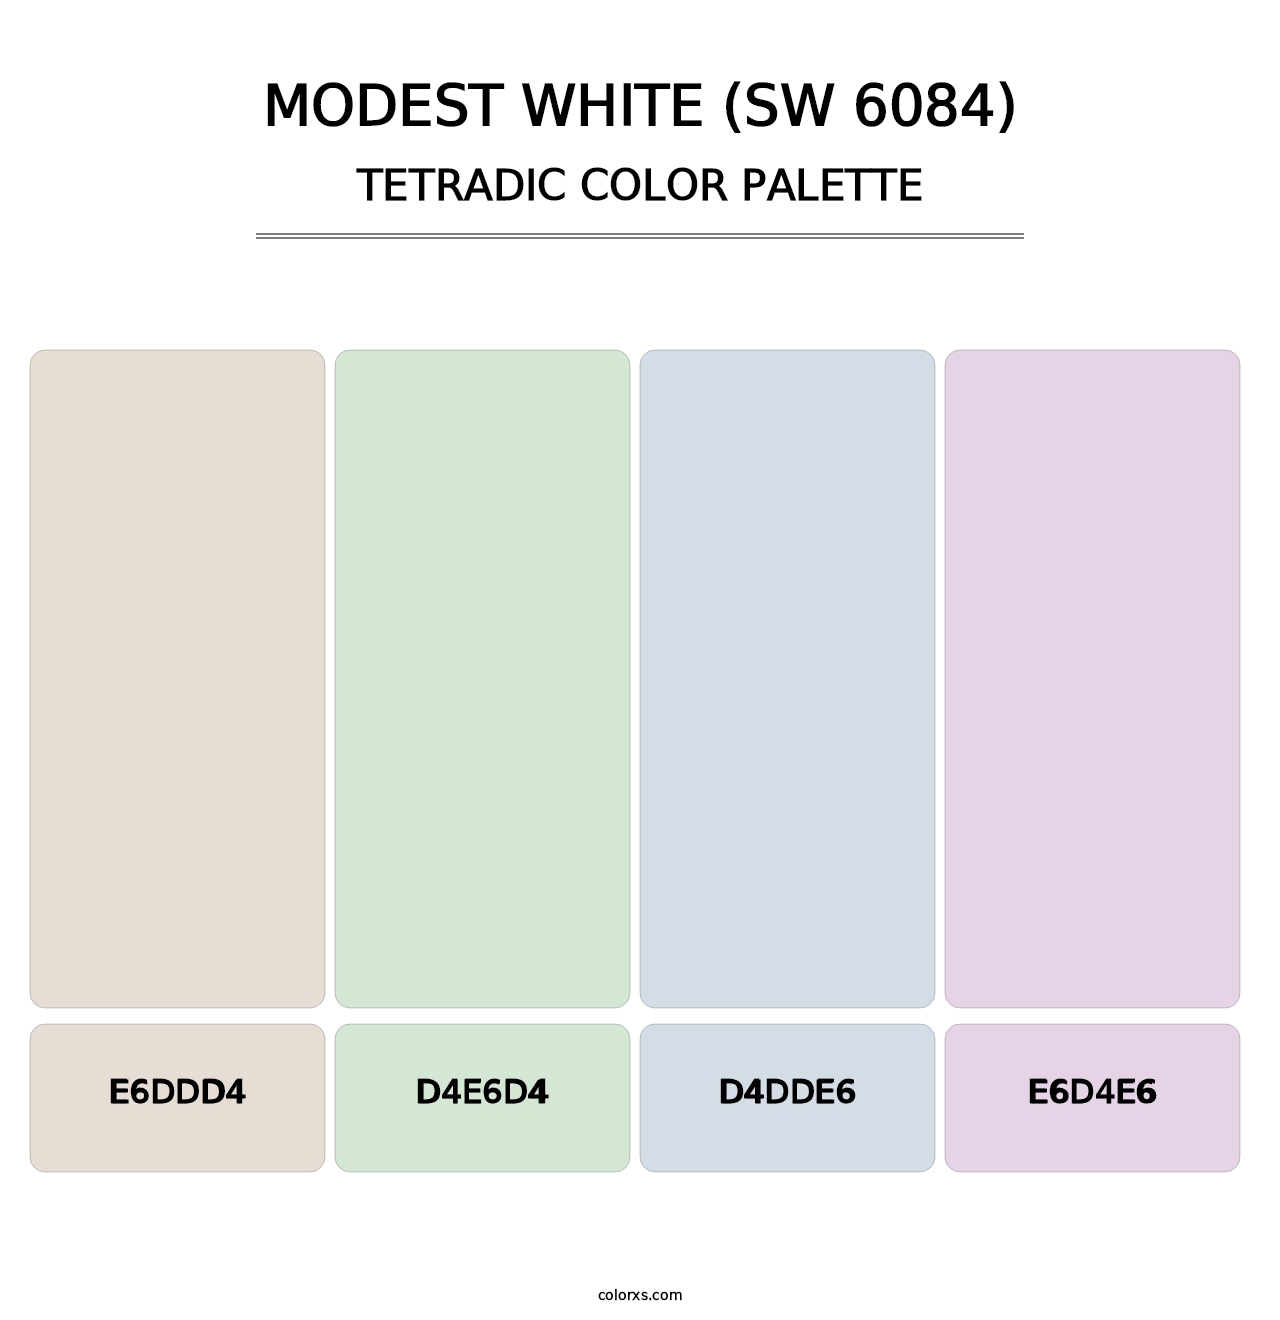 Modest White (SW 6084) - Tetradic Color Palette